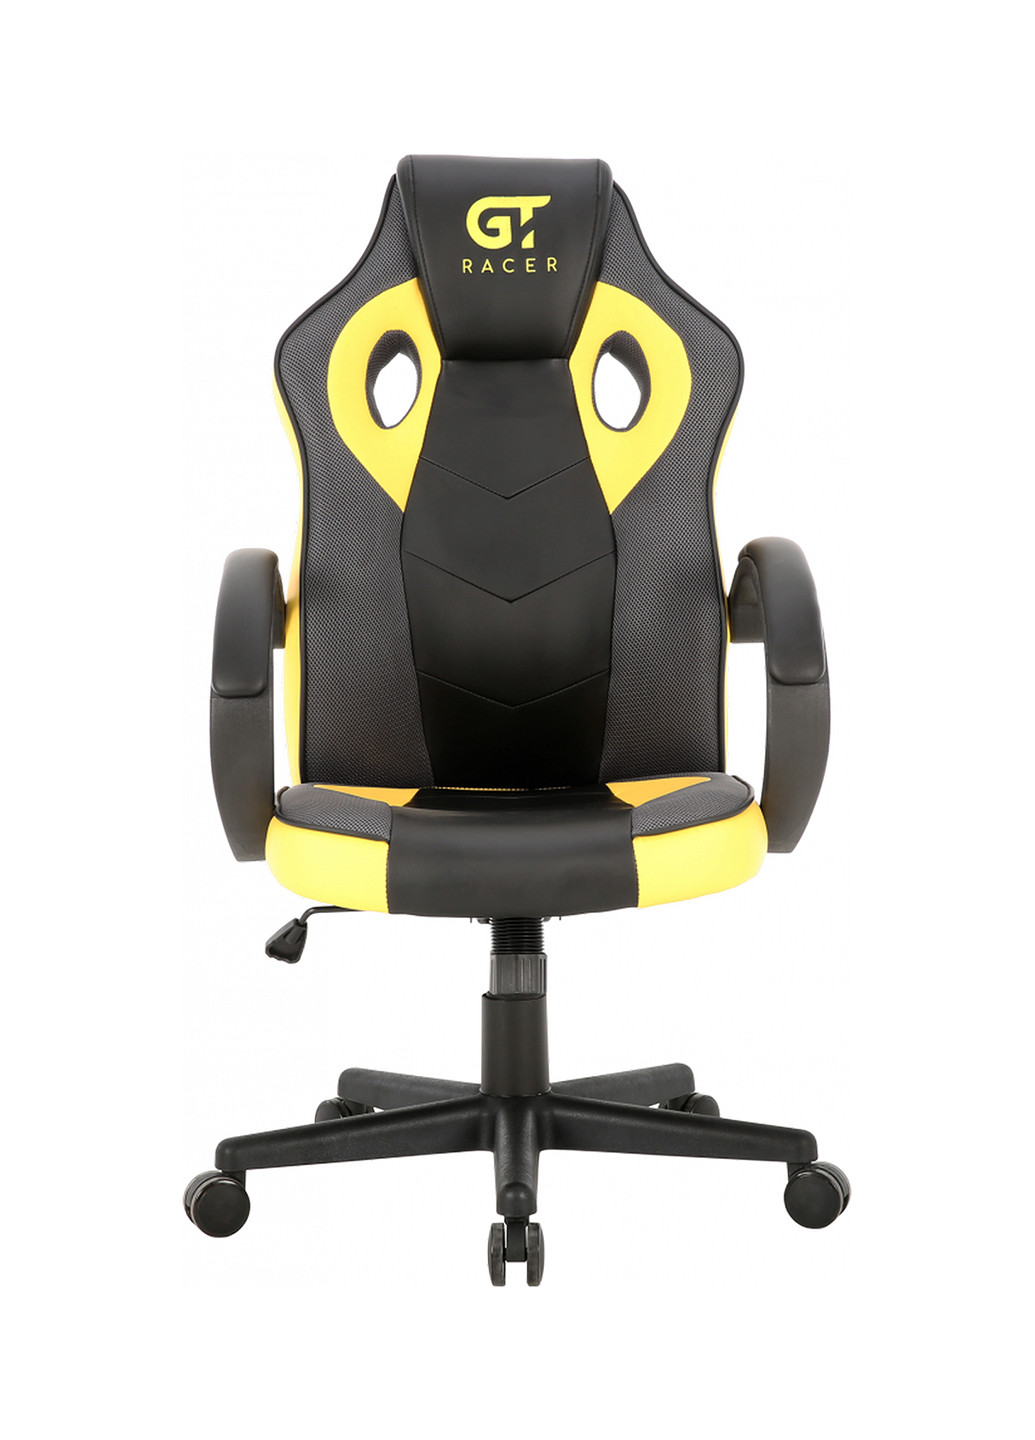 Крісло X-2752 Black / Yellow GT Racer кресло gt racer x-2752 black/yellow (144664453)